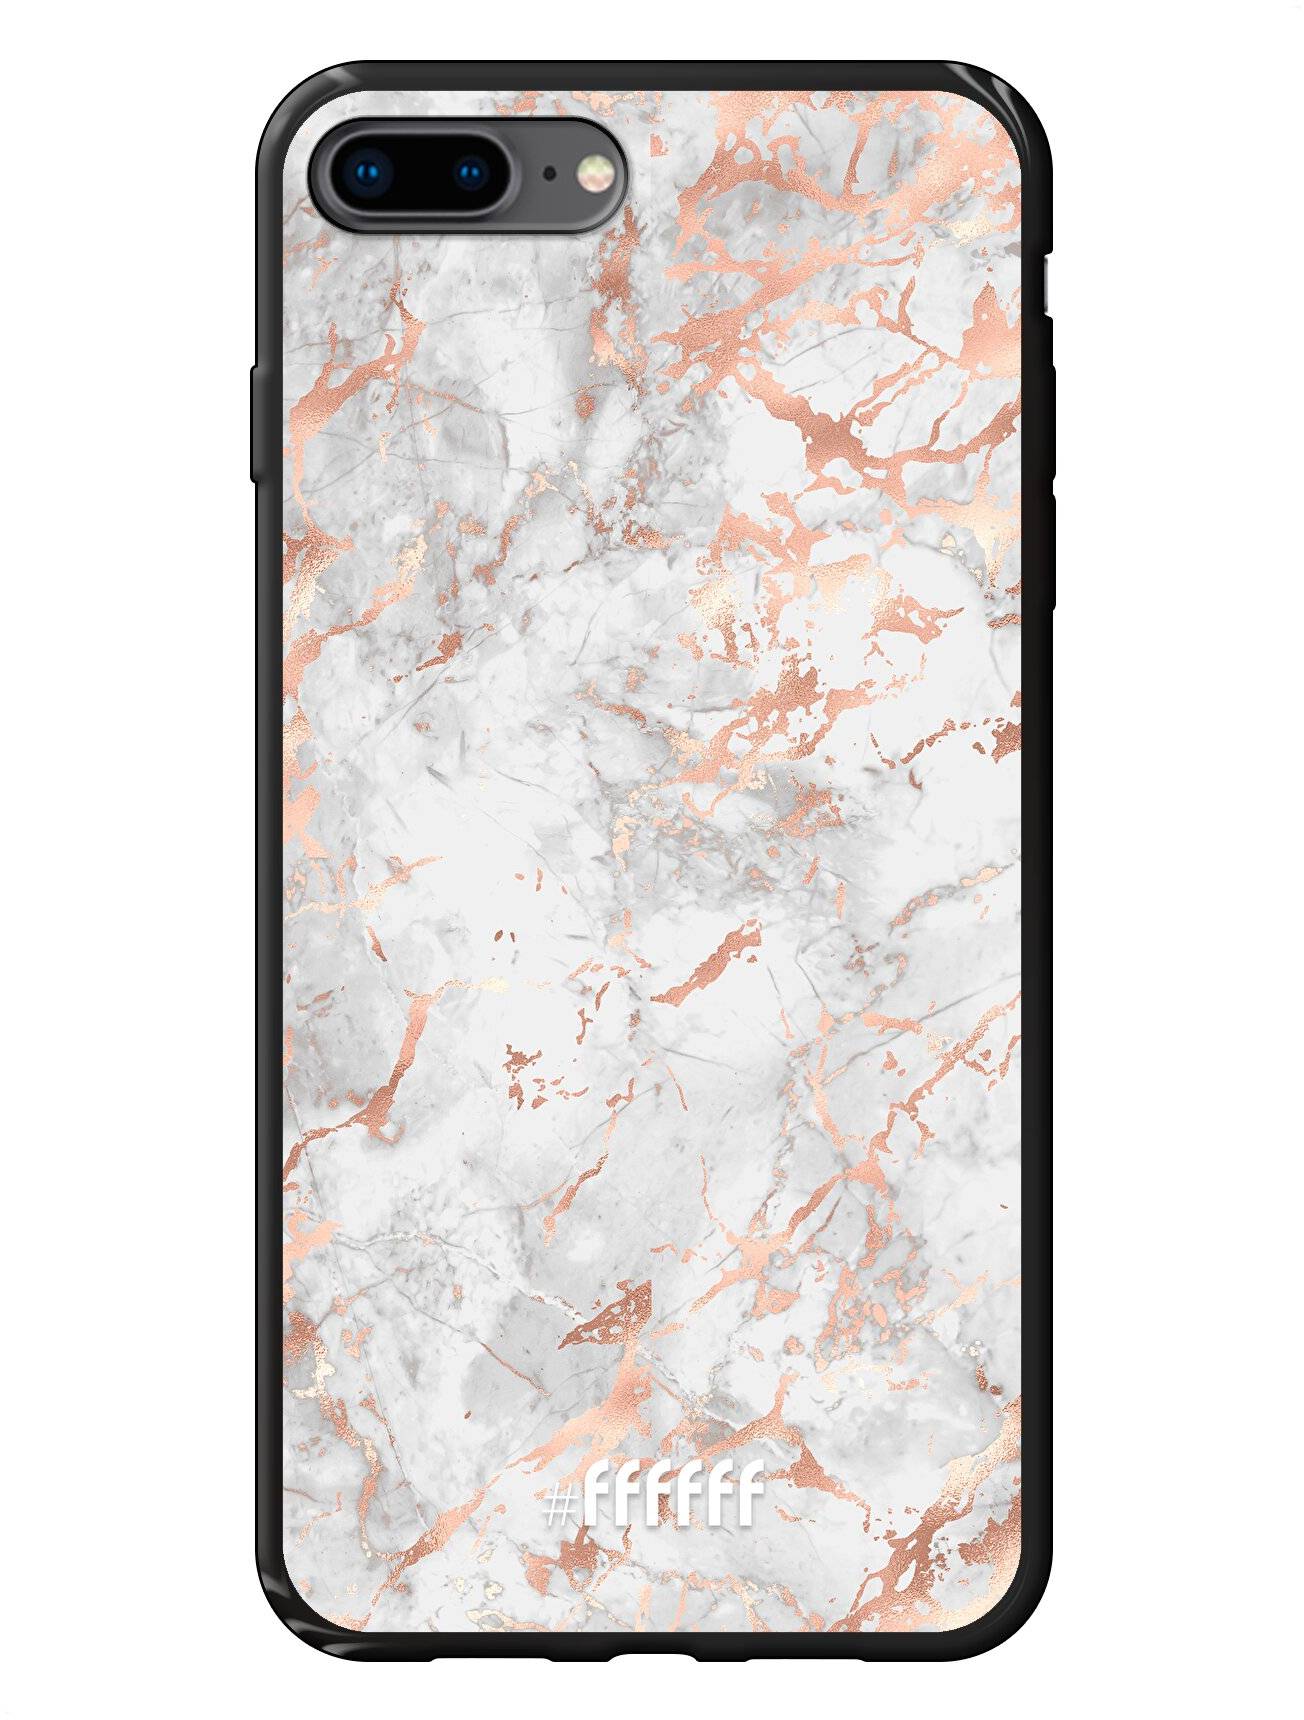 Peachy Marble iPhone 8 Plus